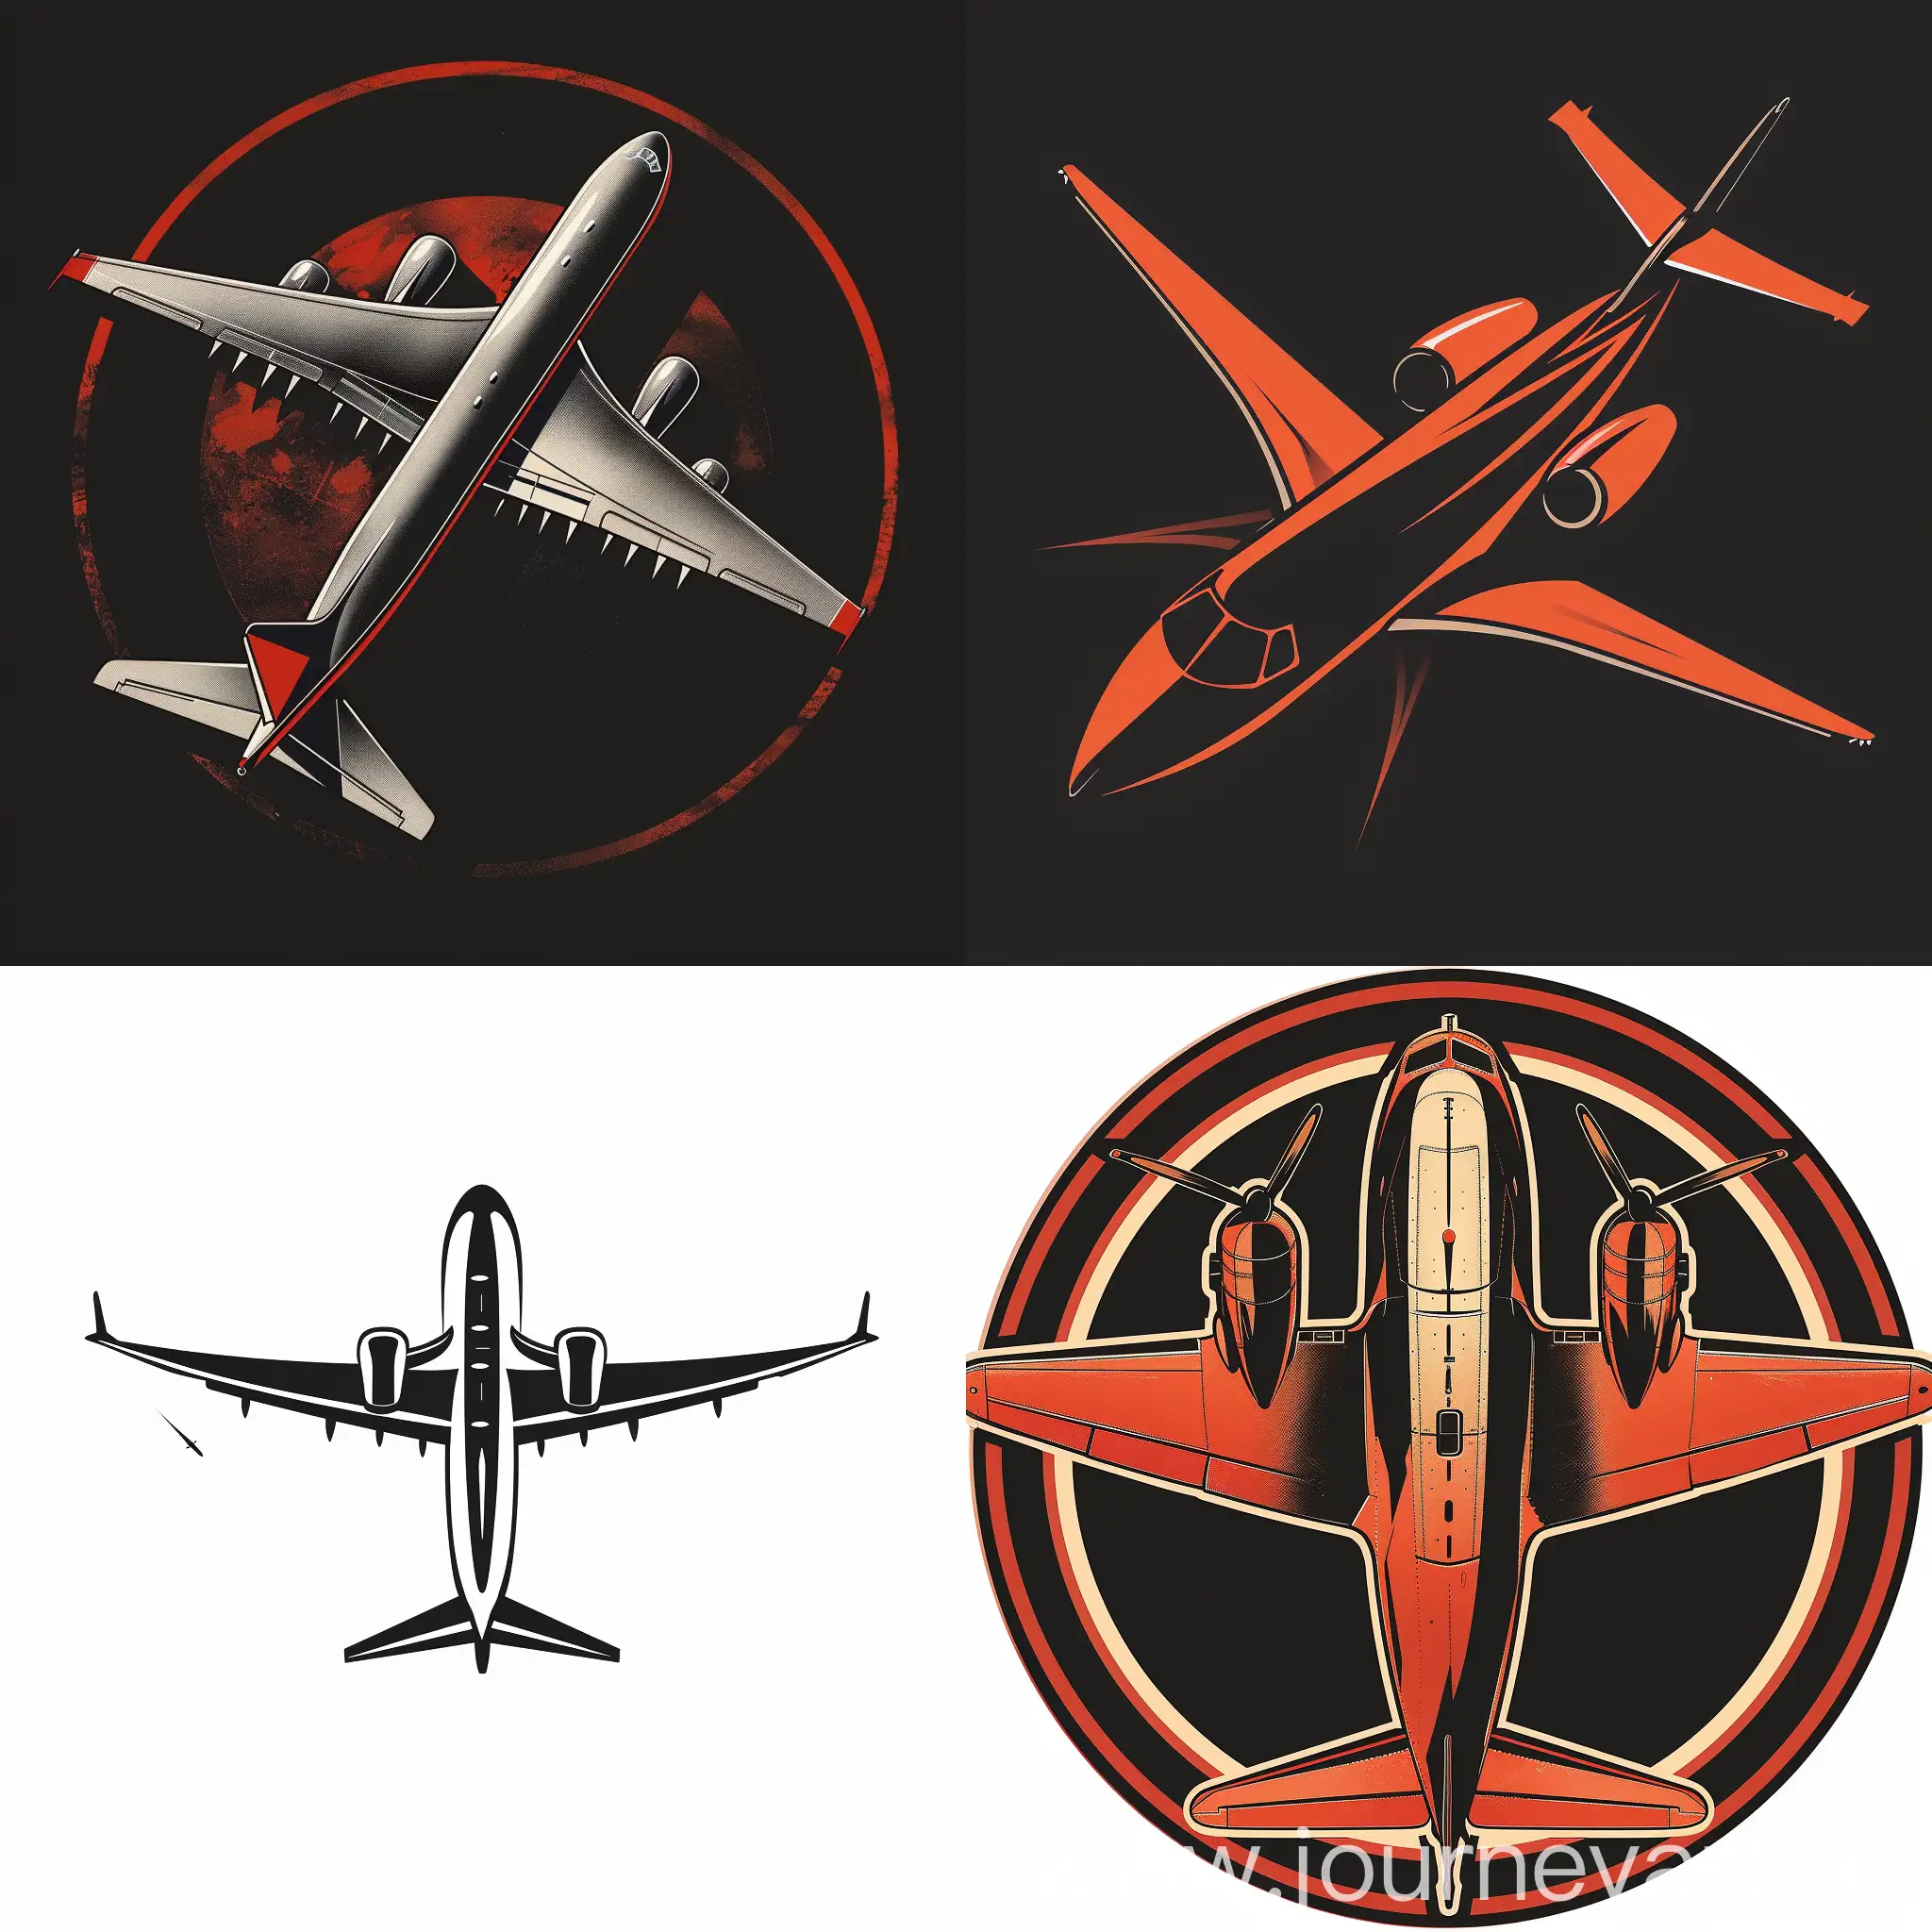 the logo of the factory producing passenger aircraft,1 passenger aircraft,